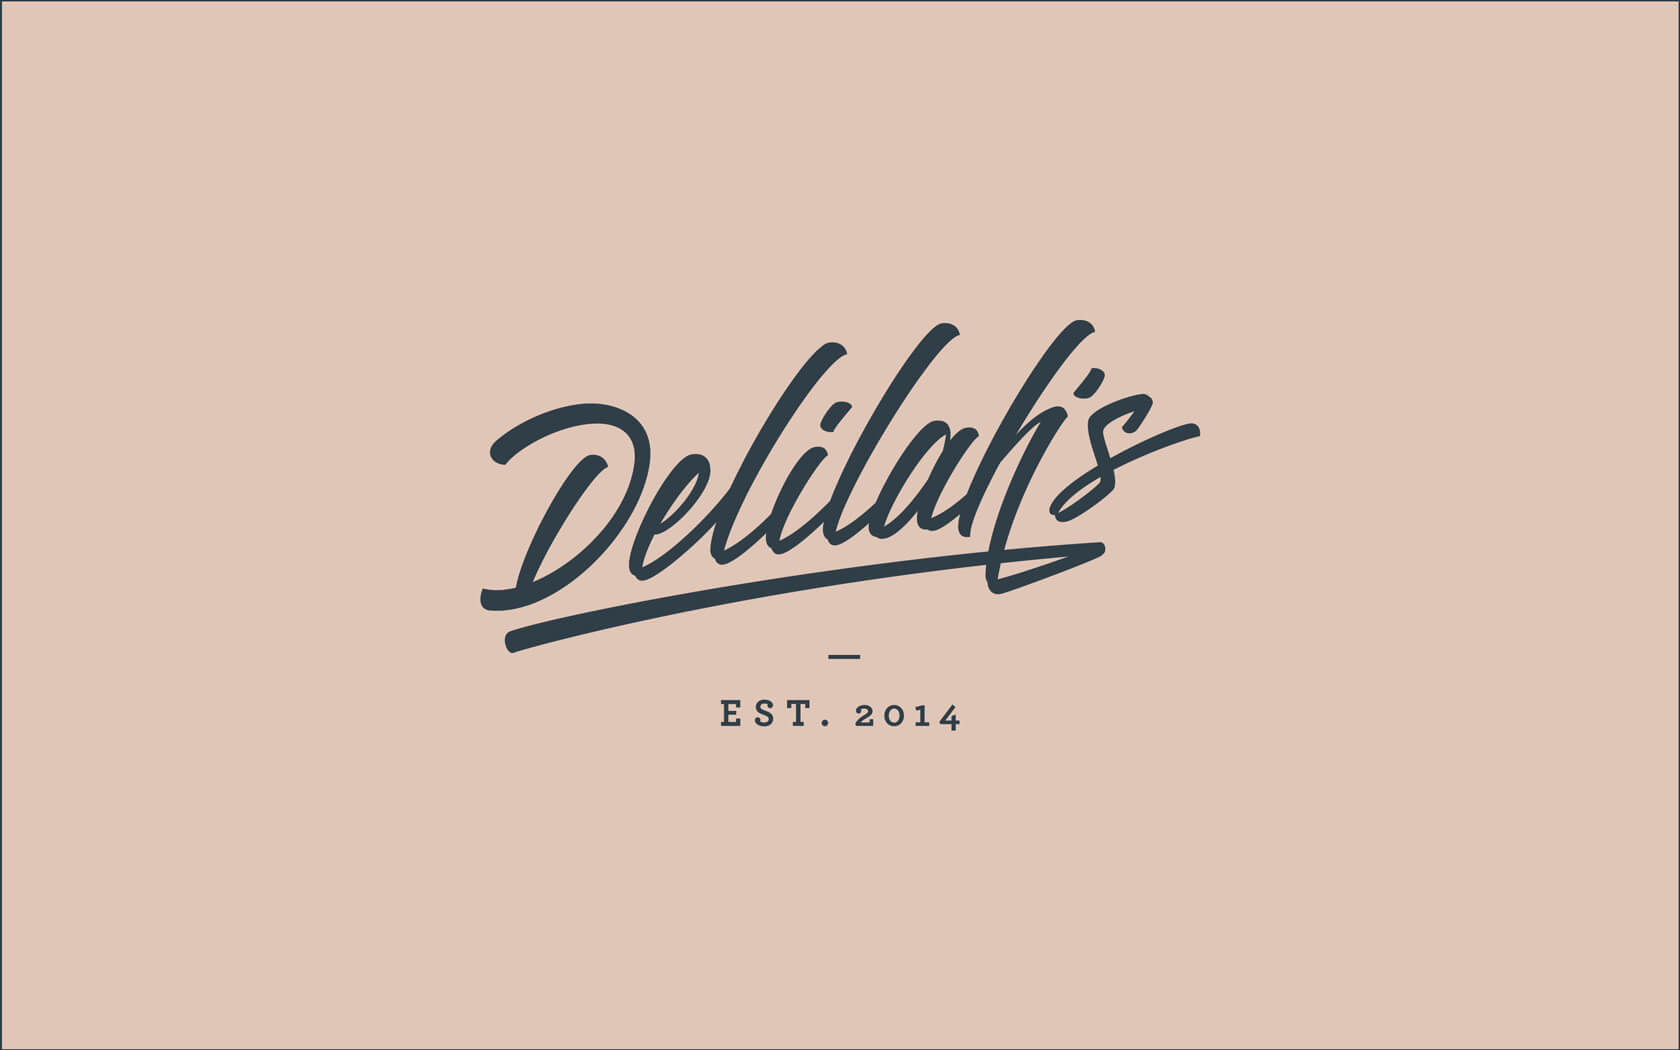 Delilah’s. Brand logo in charcoal blue on beige background